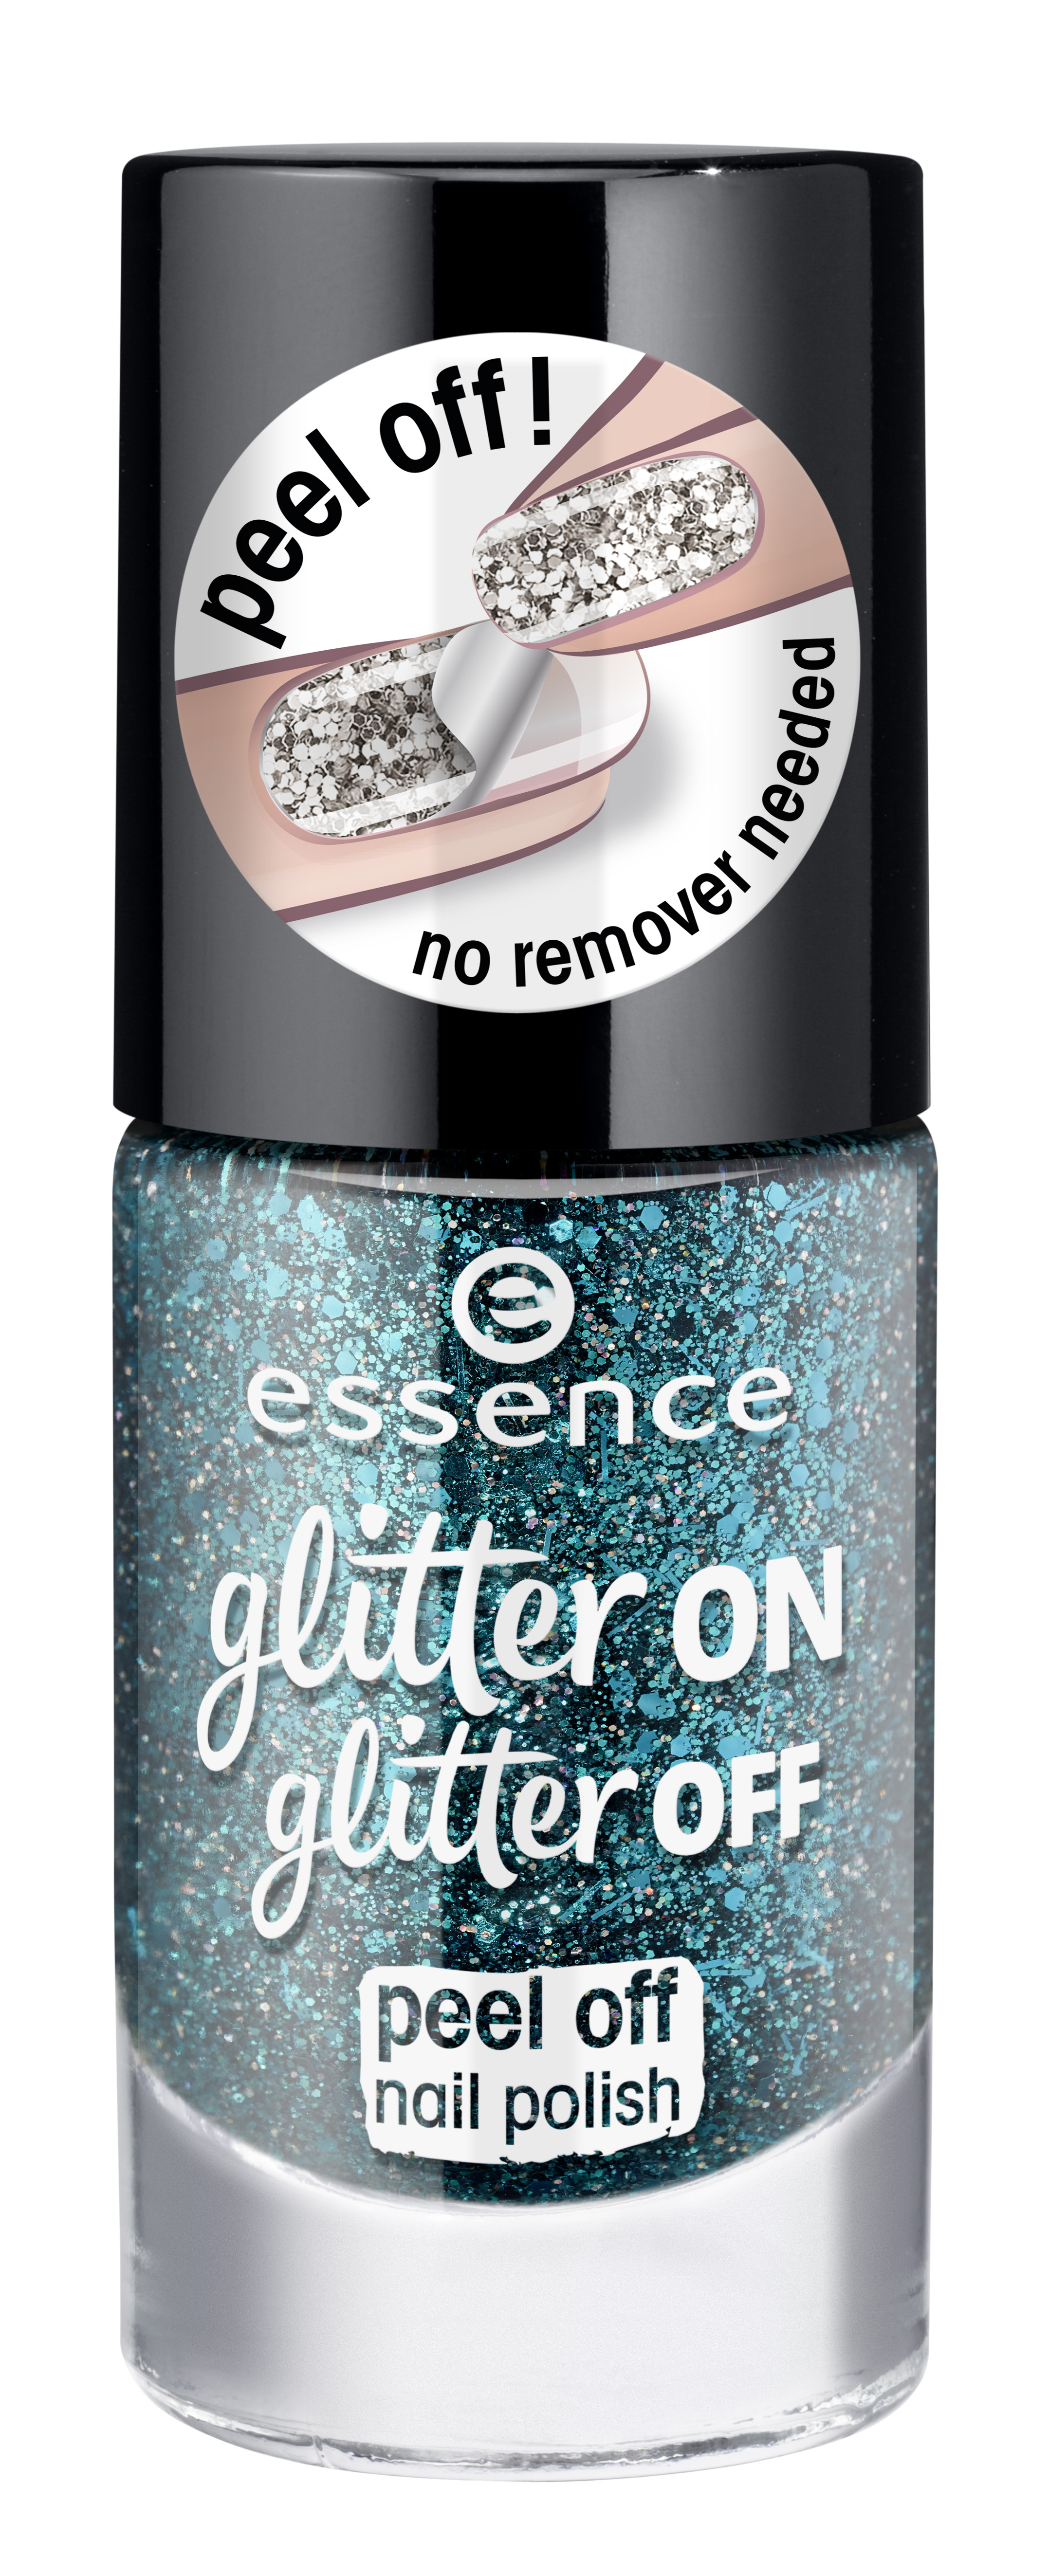 essence glitter on glitter off peel off nail polish 06 - เอสเซนส์กลิตเตอร์ออนกลิตเตอร์ออฟพีลออฟเนลโพลิช 06